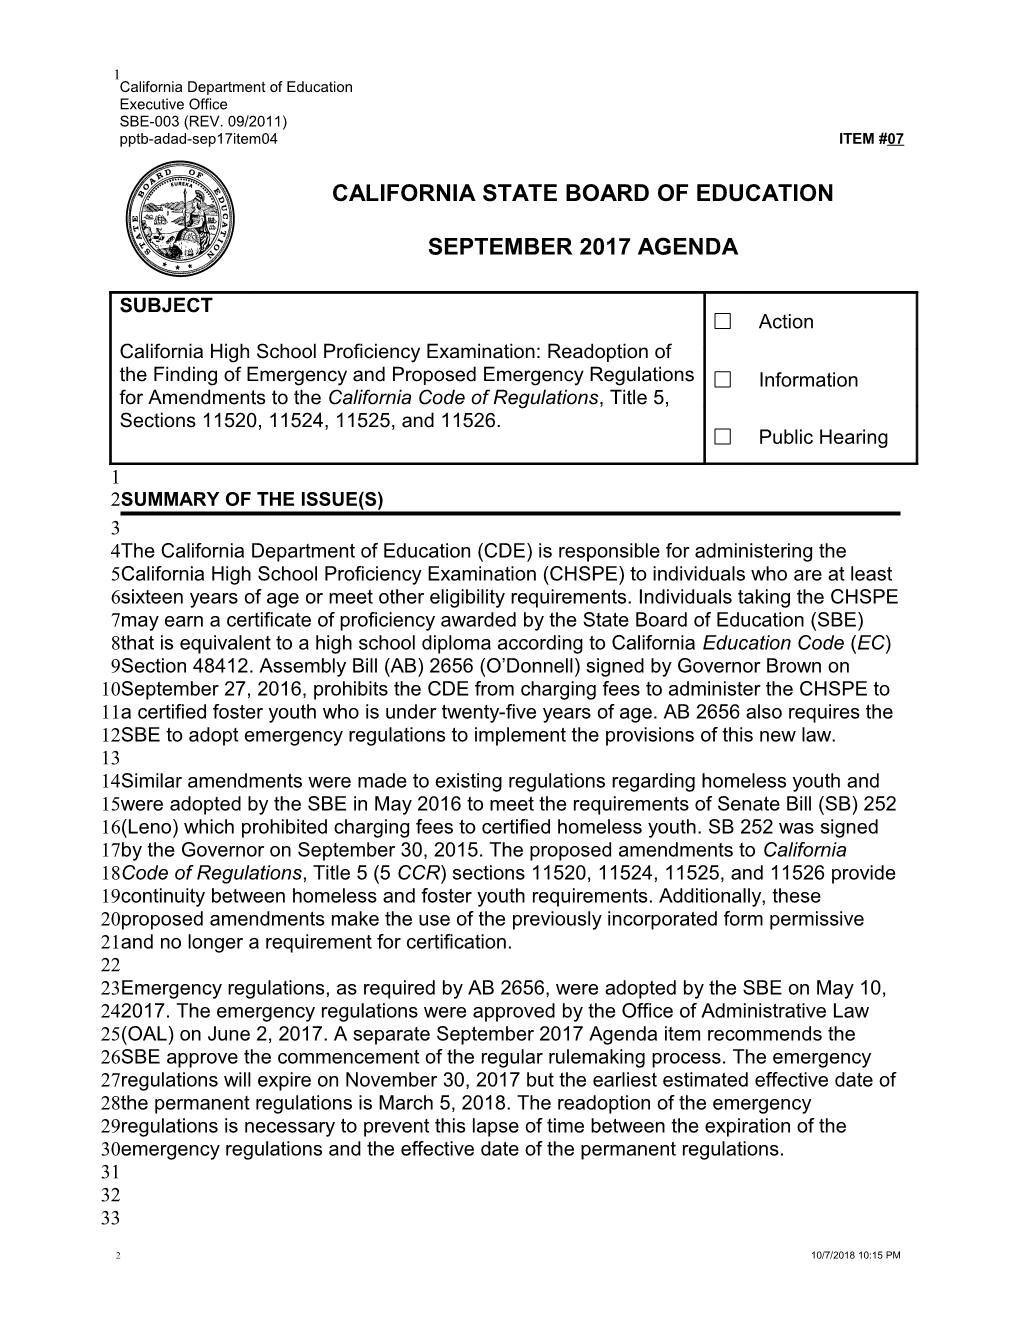 September 2017 Agenda Item 07 - Meeting Agendas (CA State Board of Education)